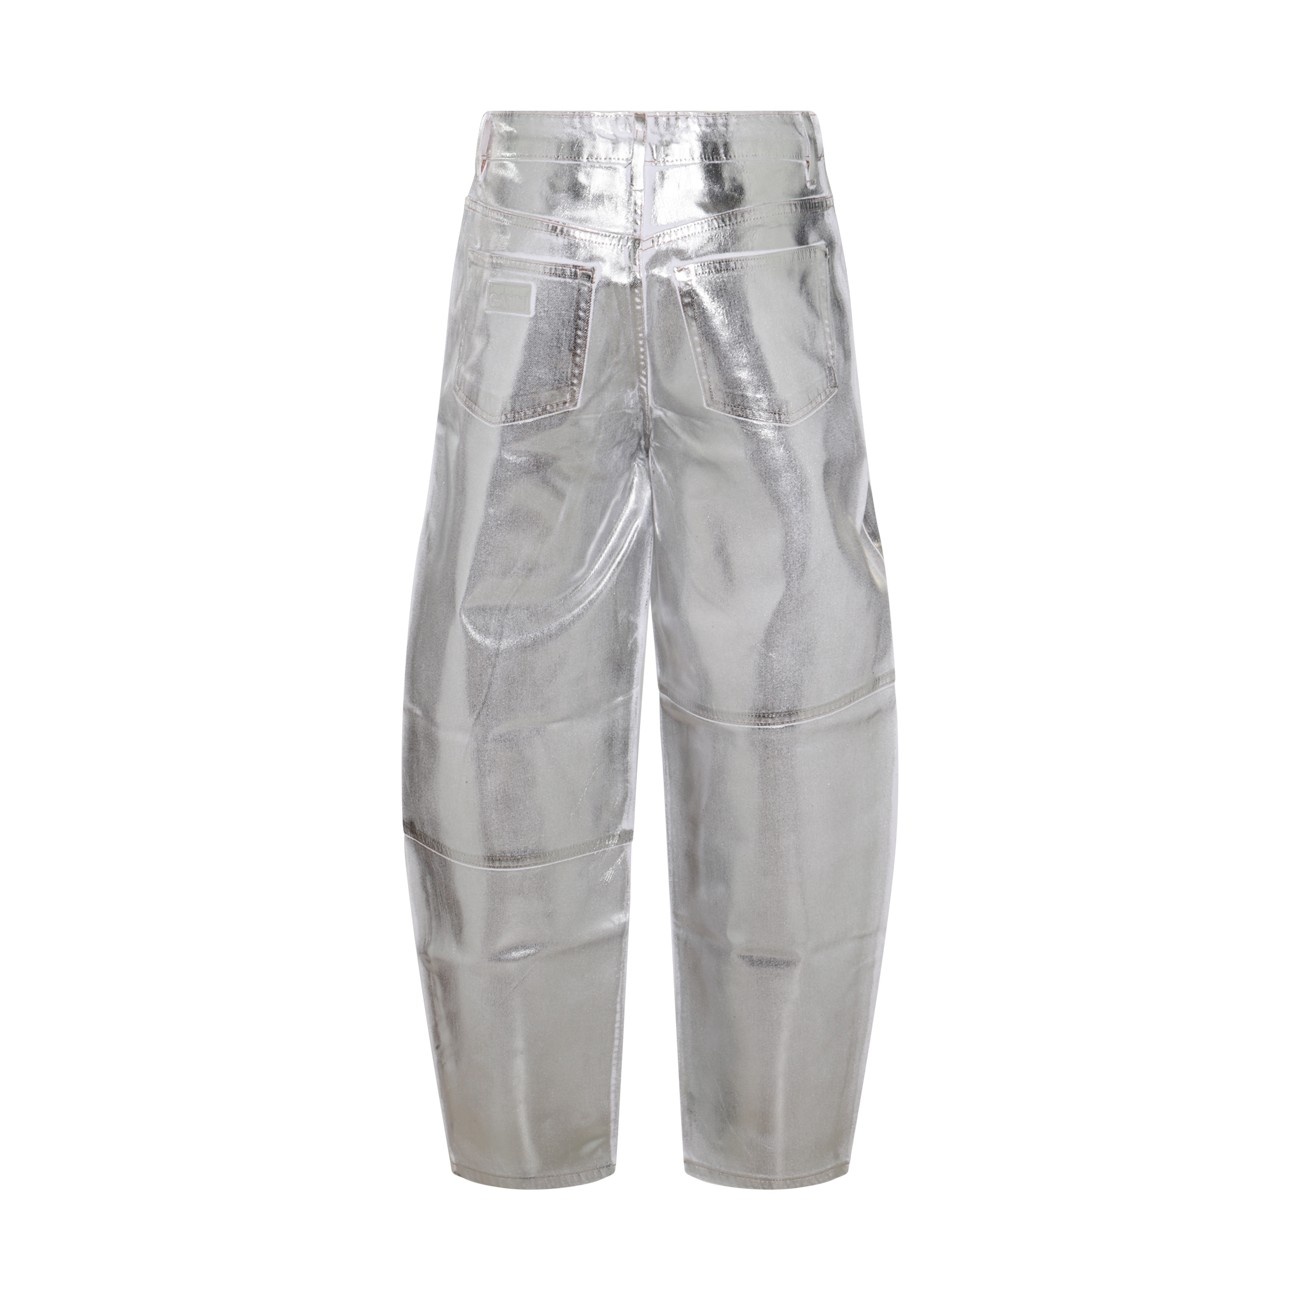 silver cotton jeans - 2